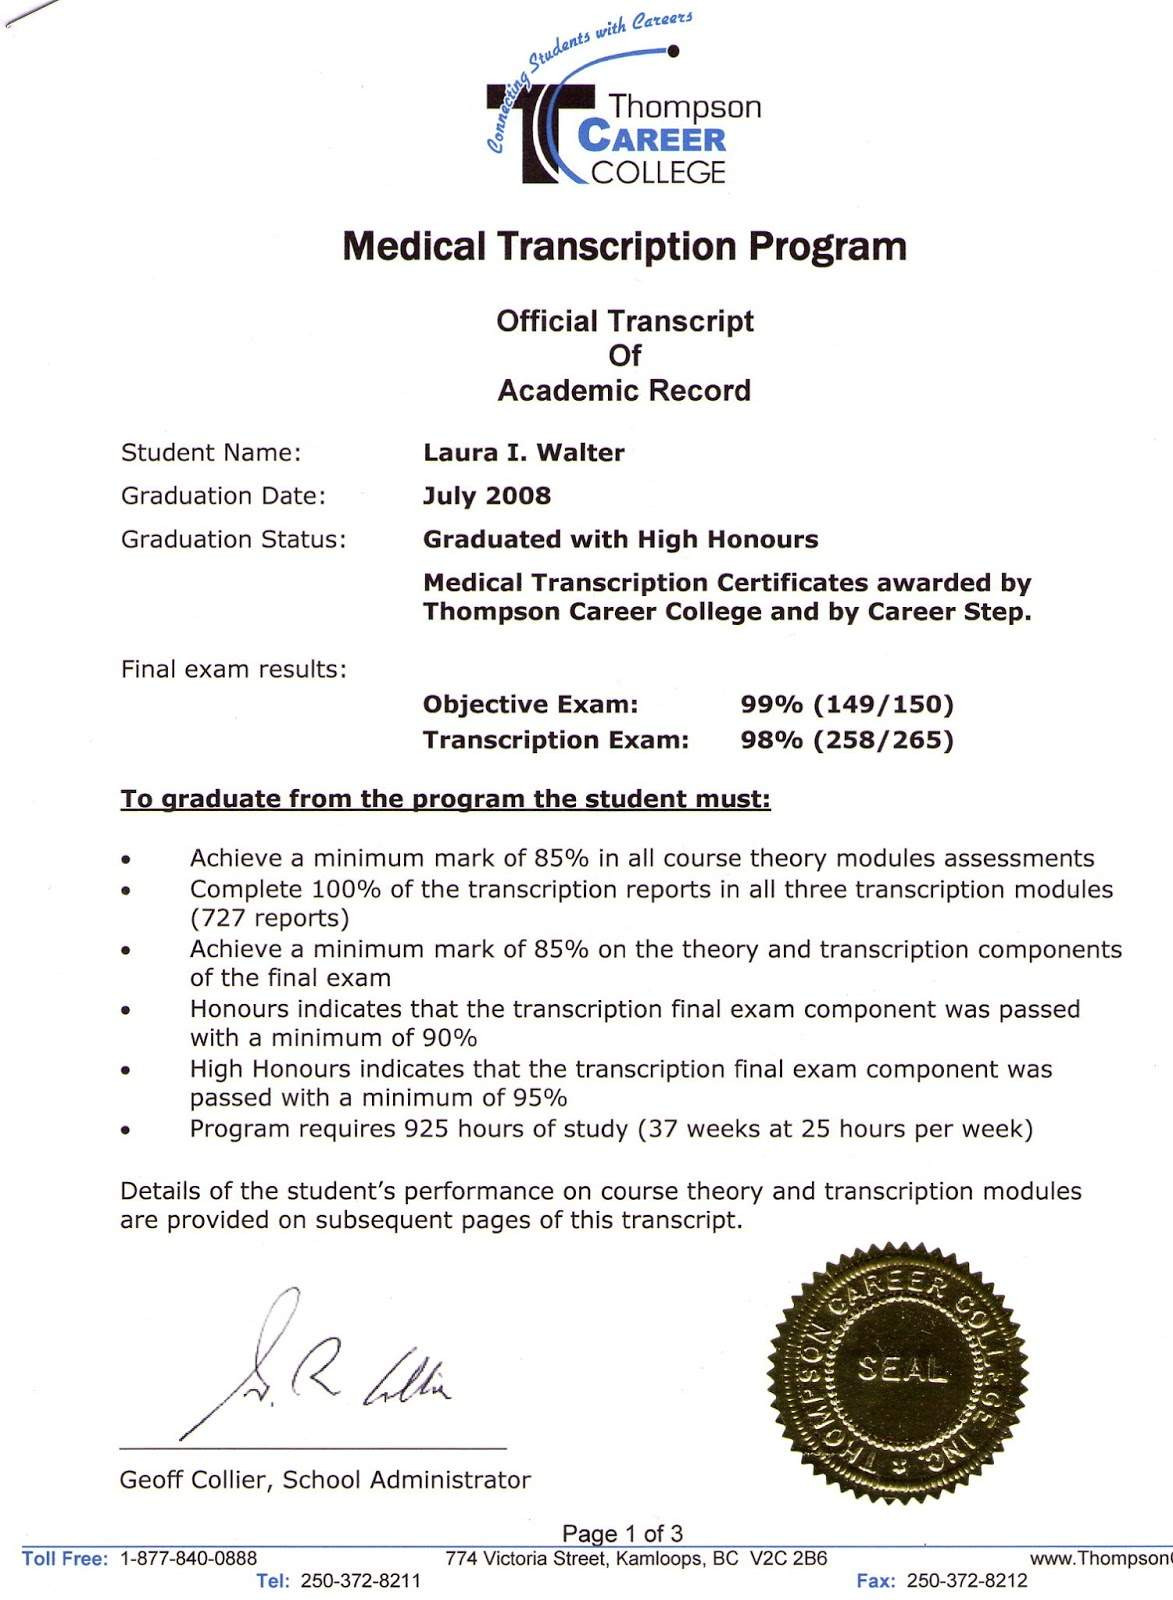 Sample Resume for Medical Transcriptionist with Experience Resume format for Medical Transcription